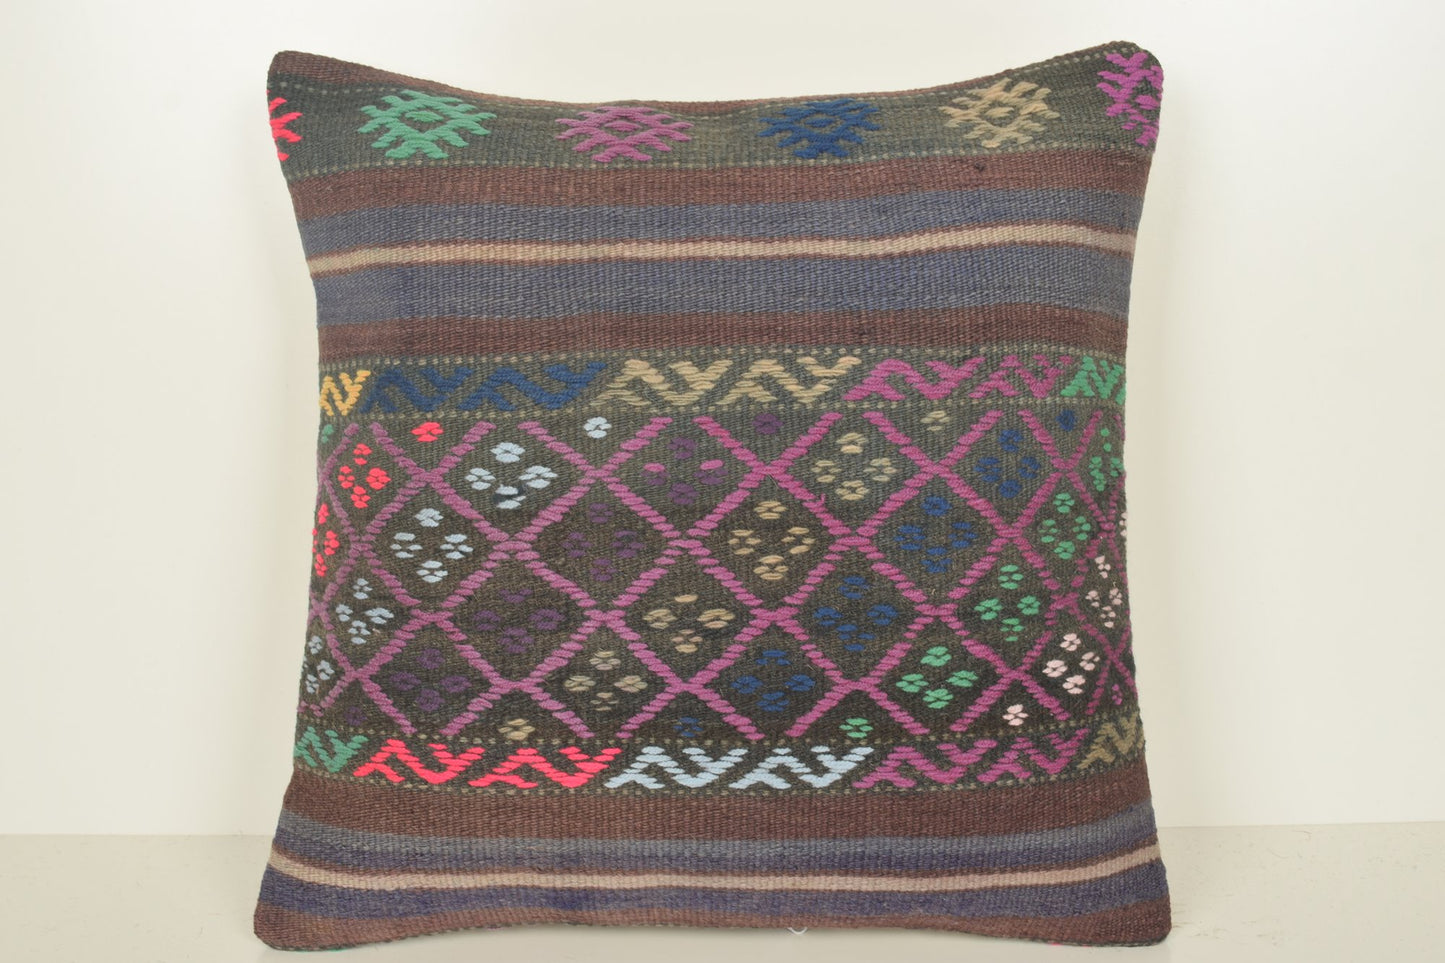 Neutral Kilim Pillows C01400 18x18 Garden Economical Asian